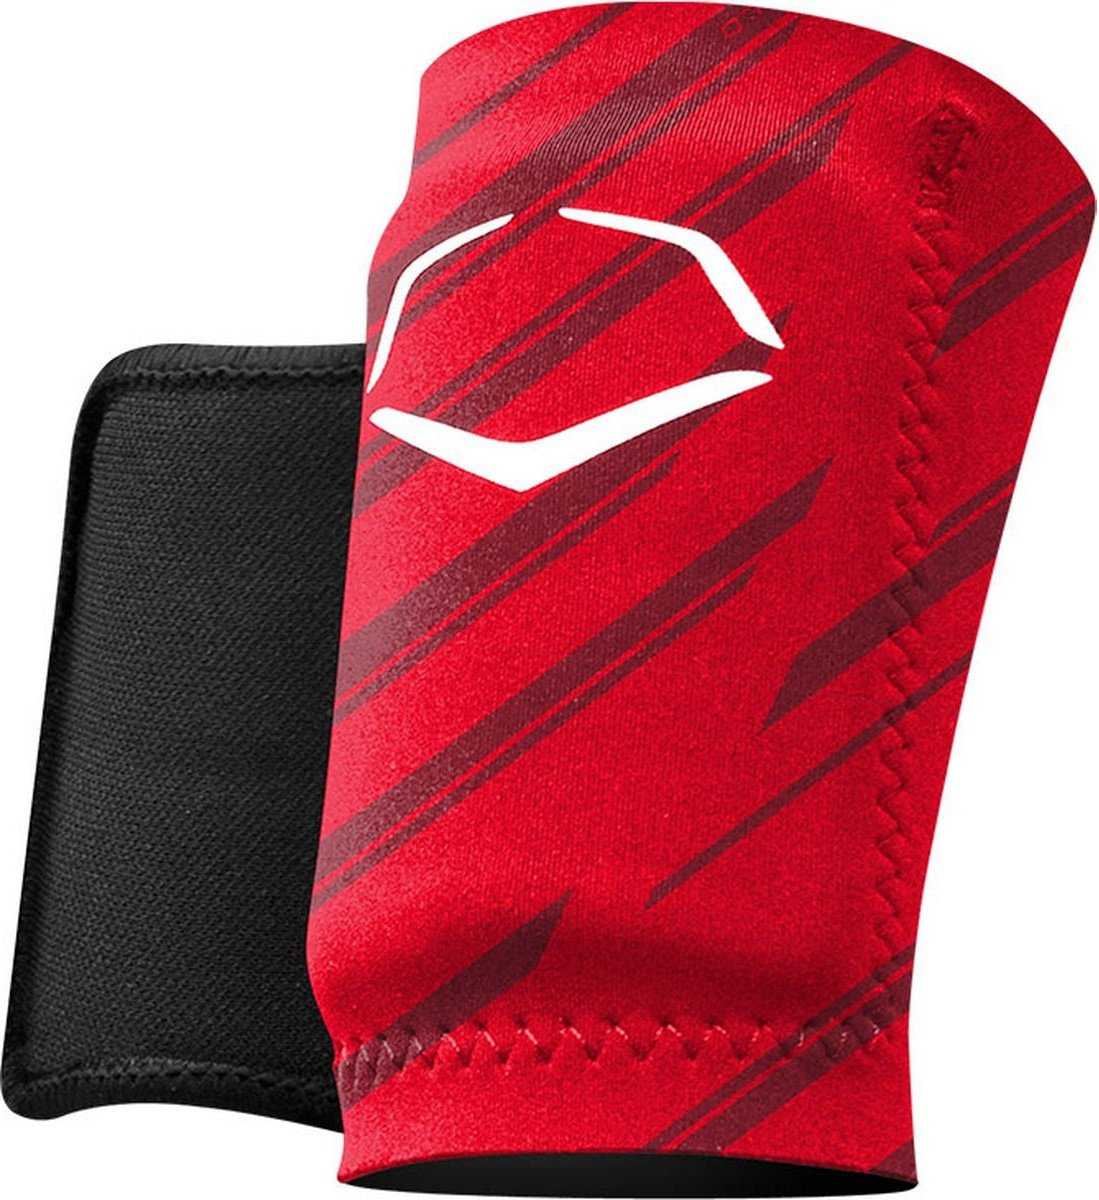 EvoShield Protective Wrist Guard - Stripe Red - HIT A Double